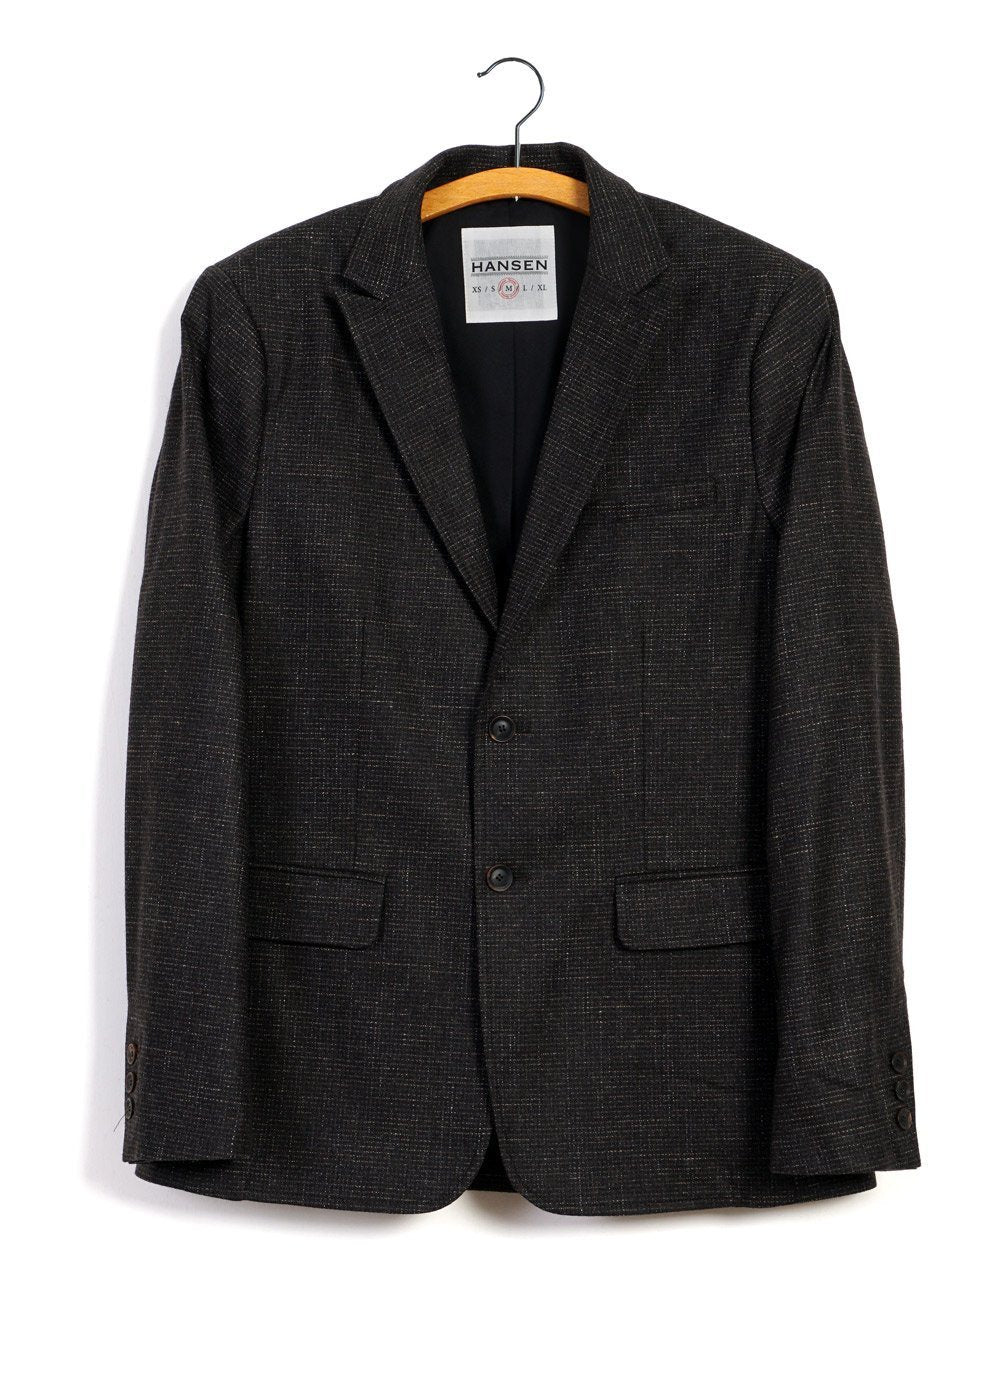 HANSEN Garments - CHRISTOFFER | Classic Two Button Blazer | Macchiato - HANSEN Garments